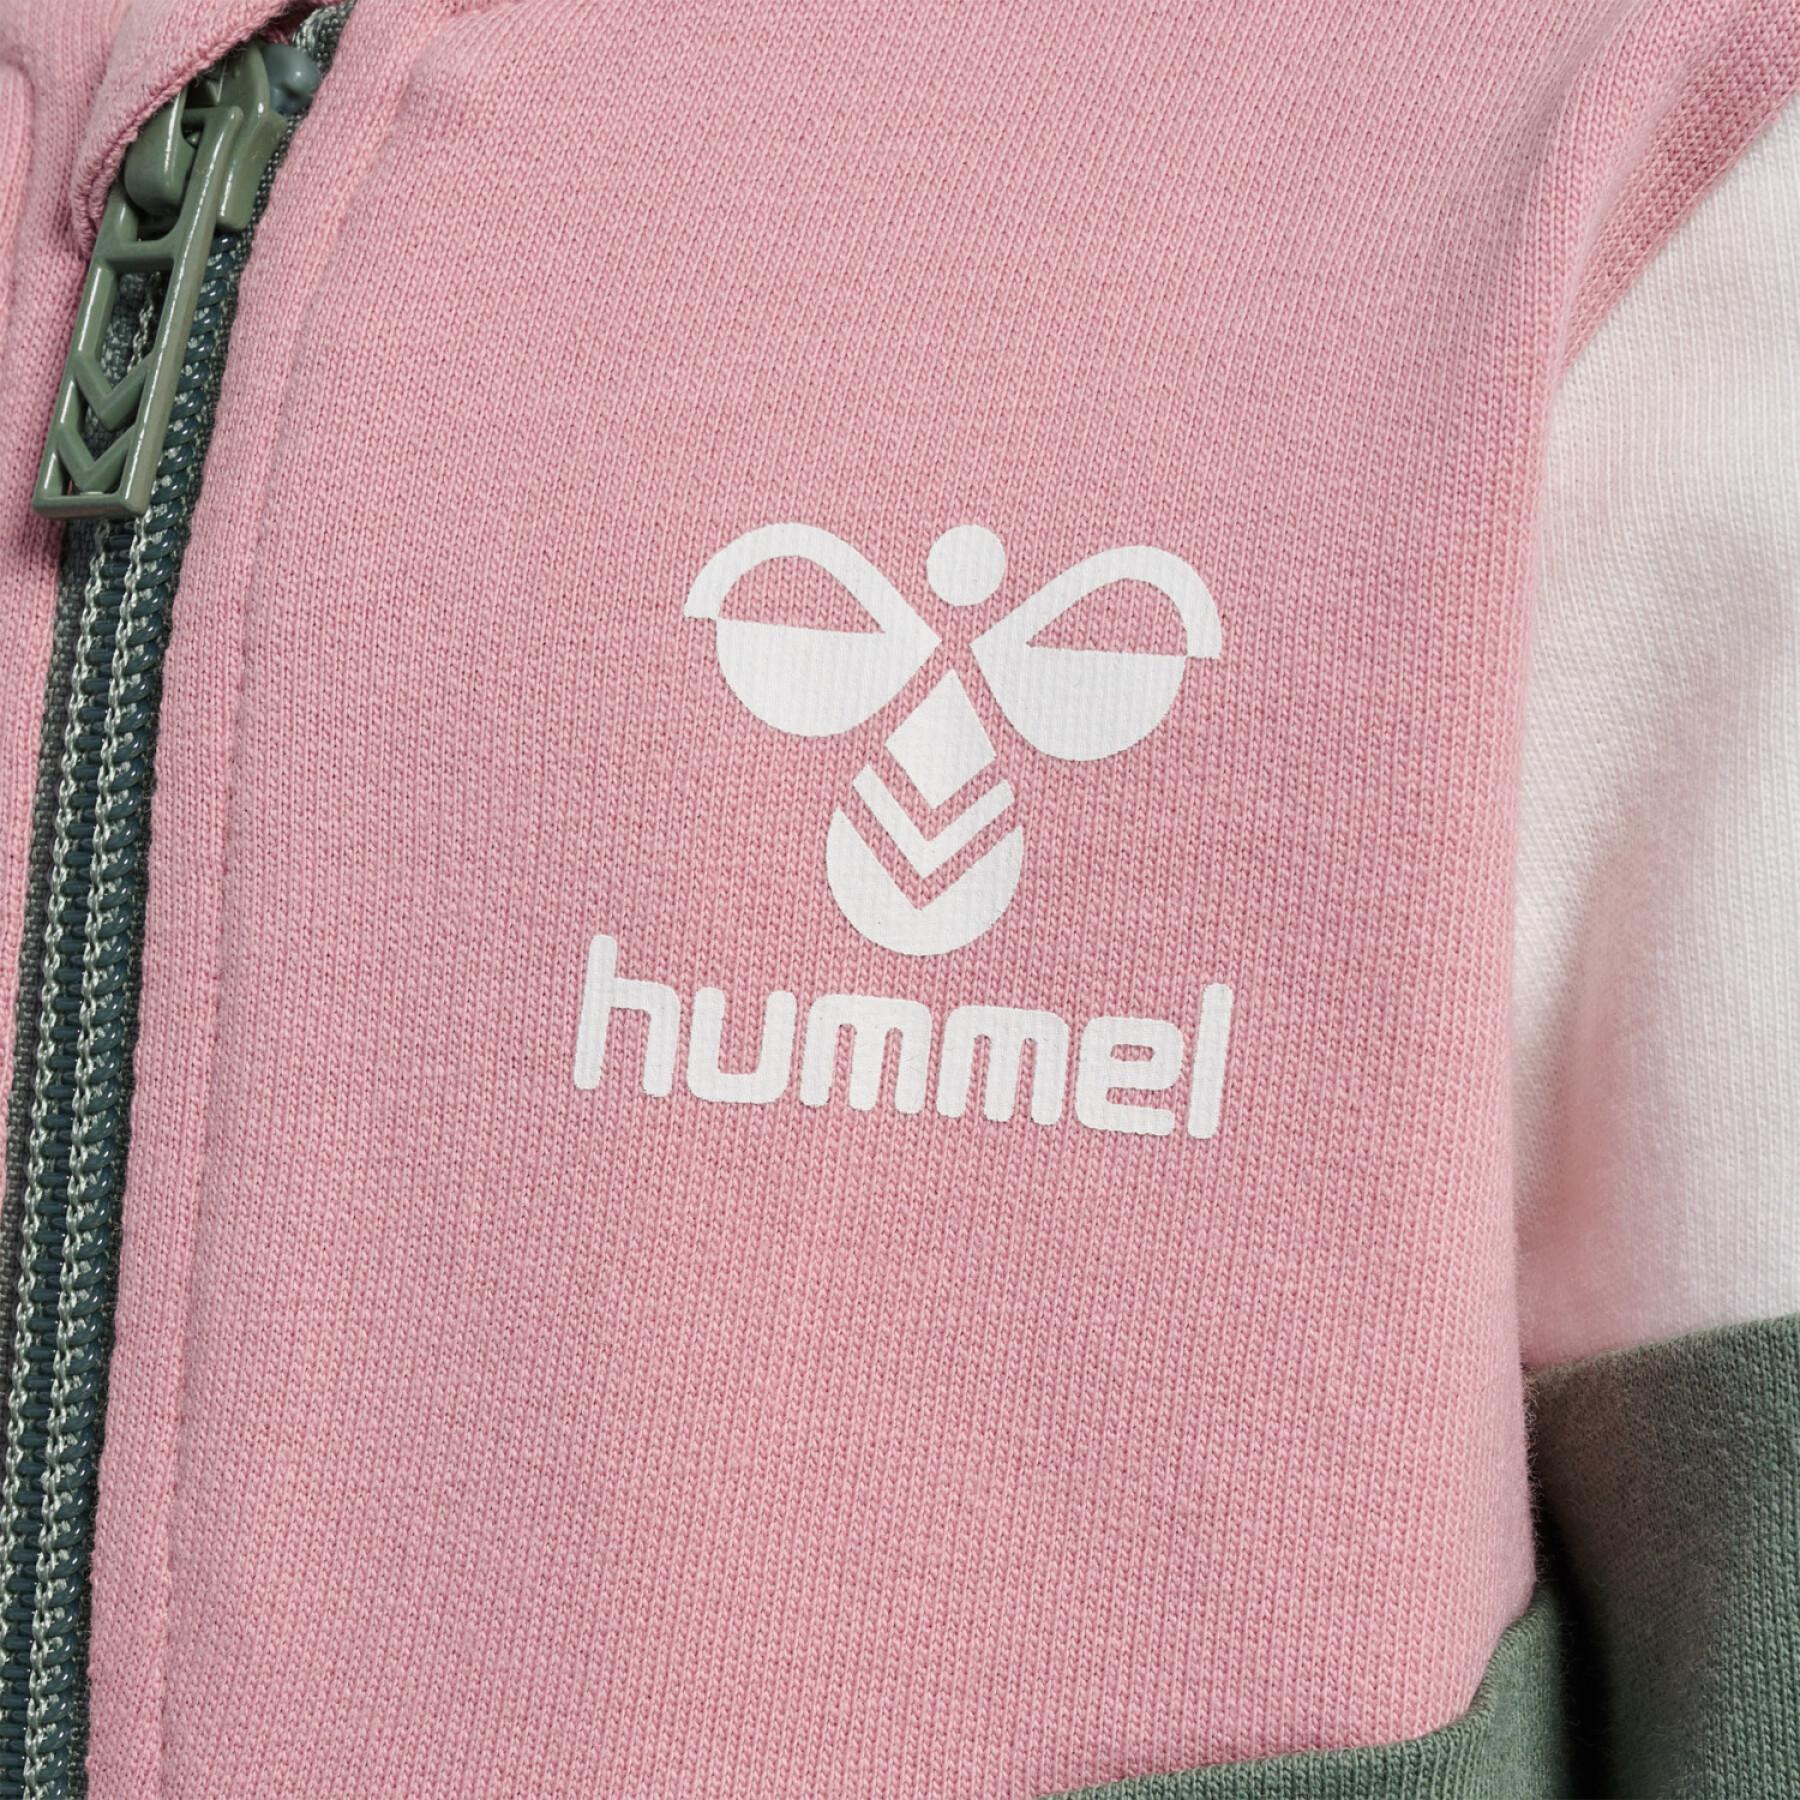 Veste de survêtement bébé Hummel hmlFinna